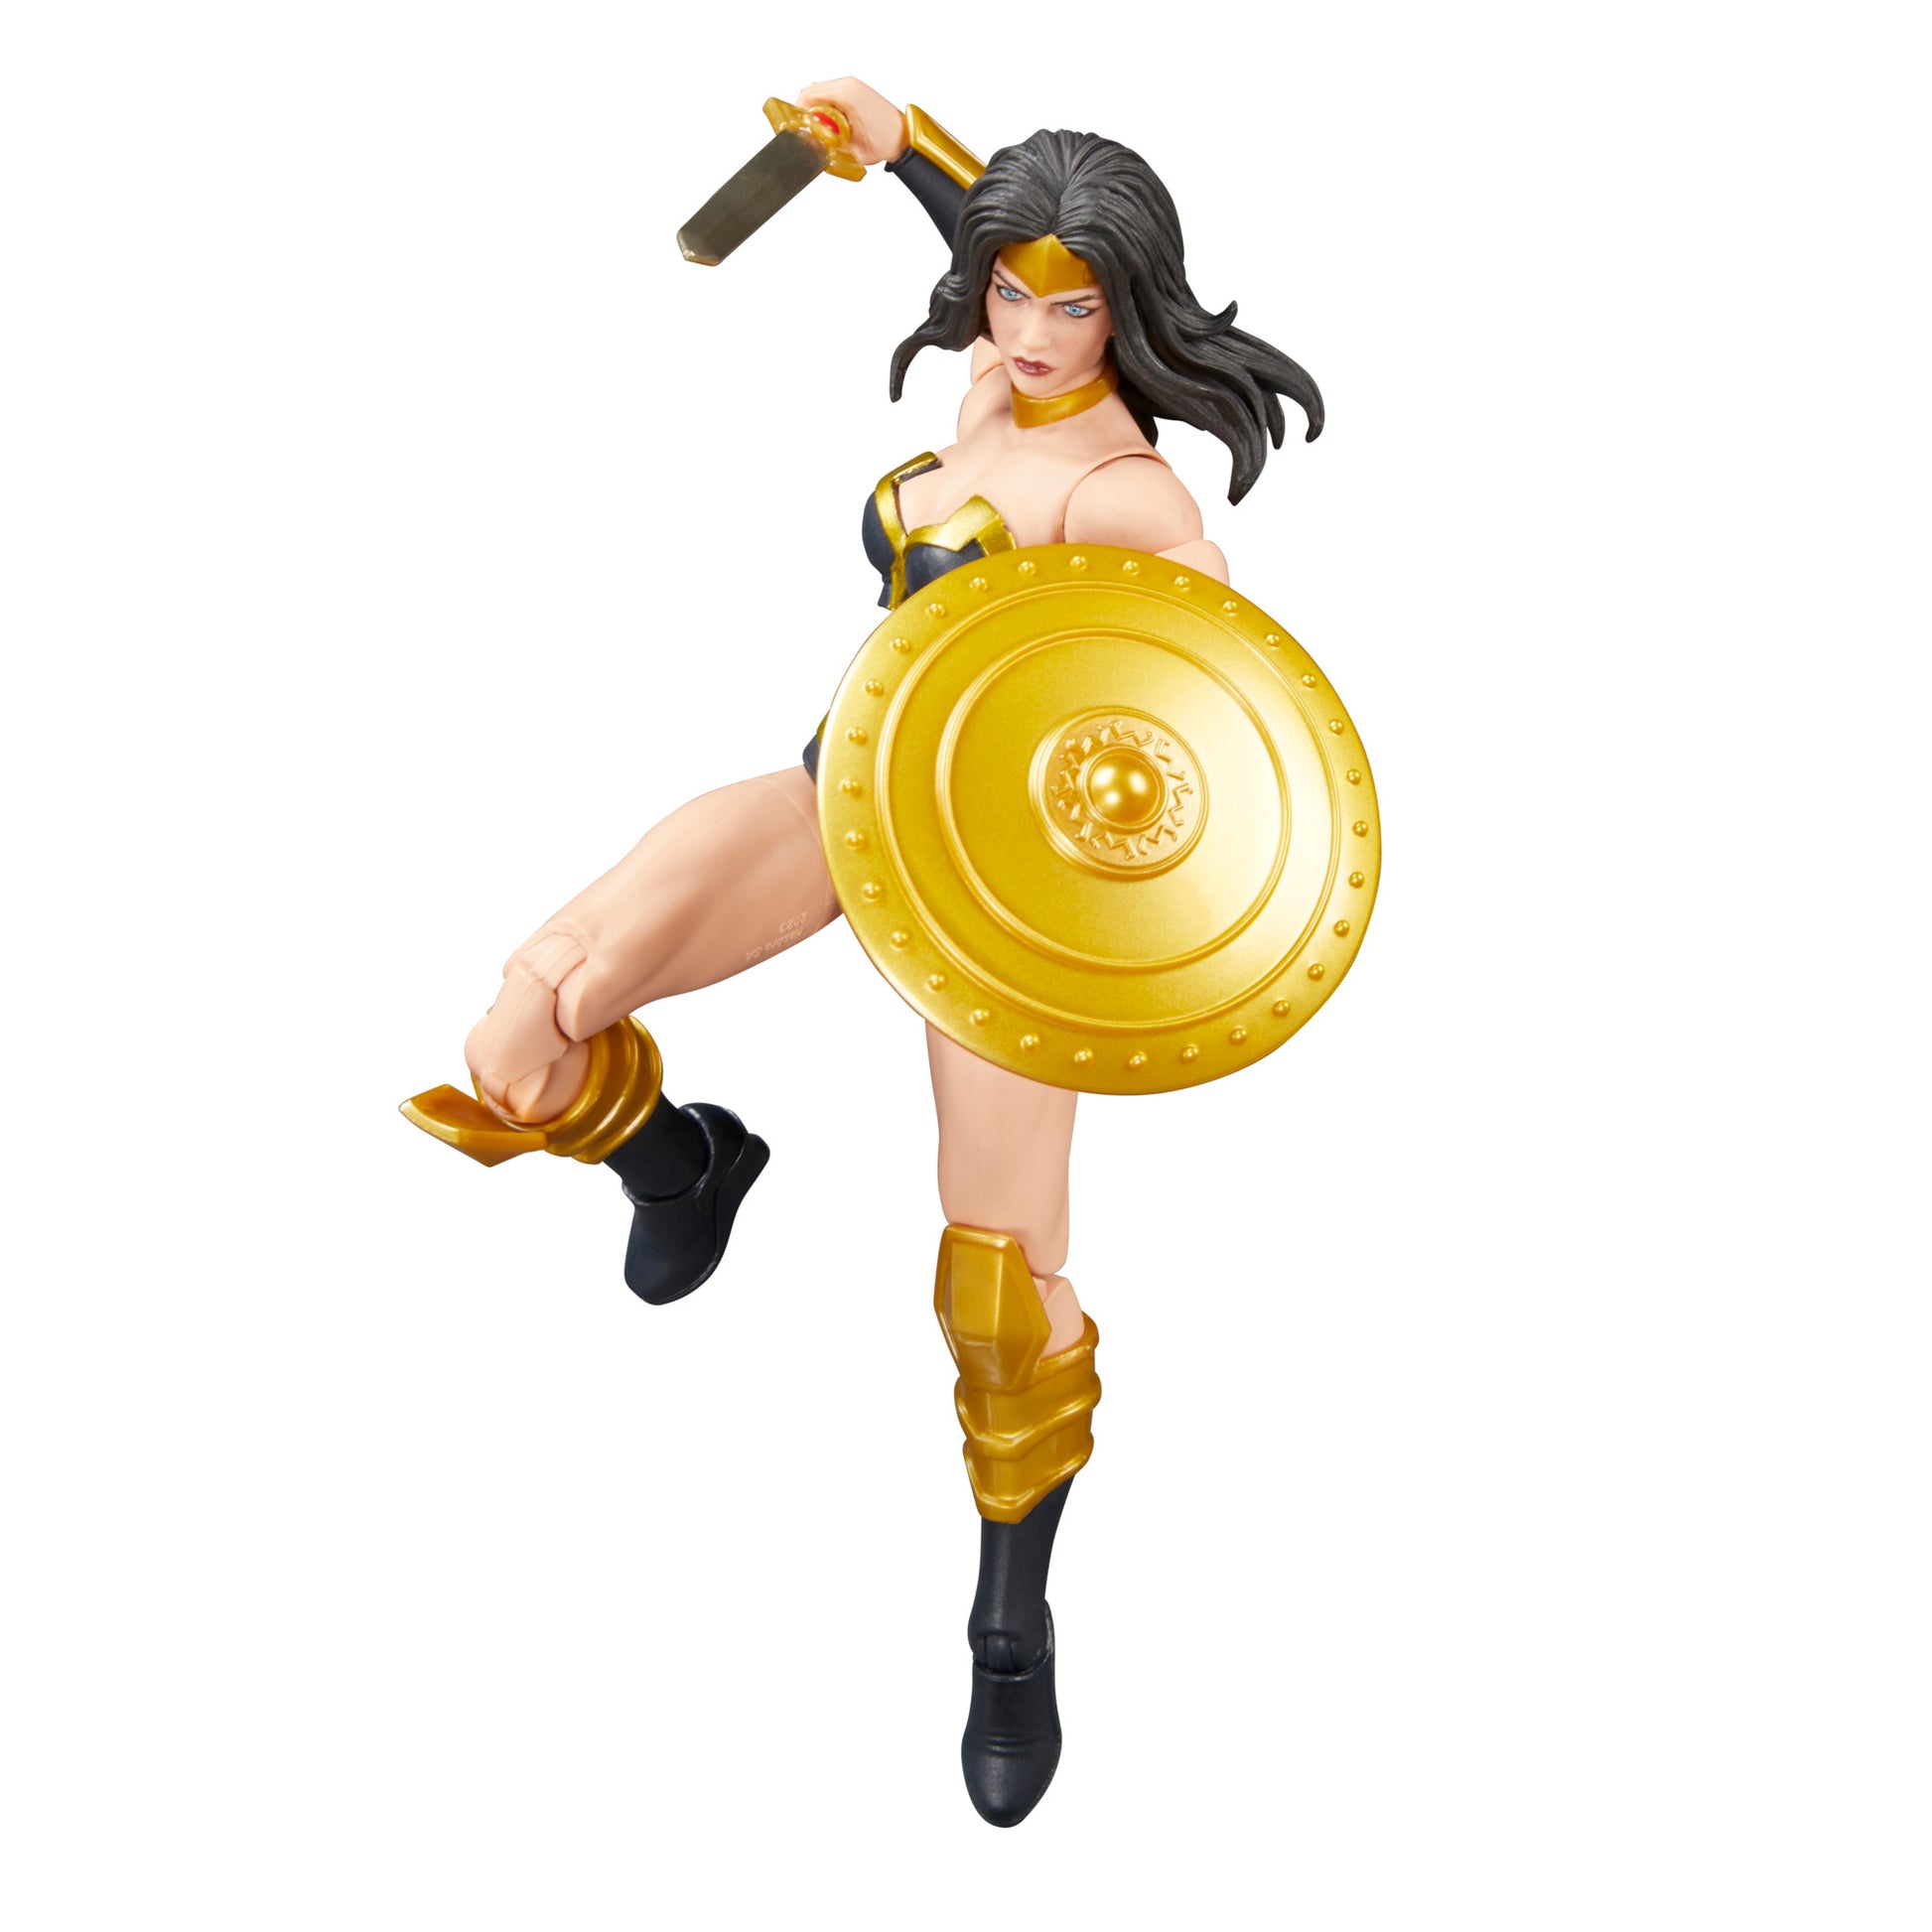  Marvel Legends Series Squadron Supreme Power Princess, 6" Collectible Action Figure HERETOSERVEYOU